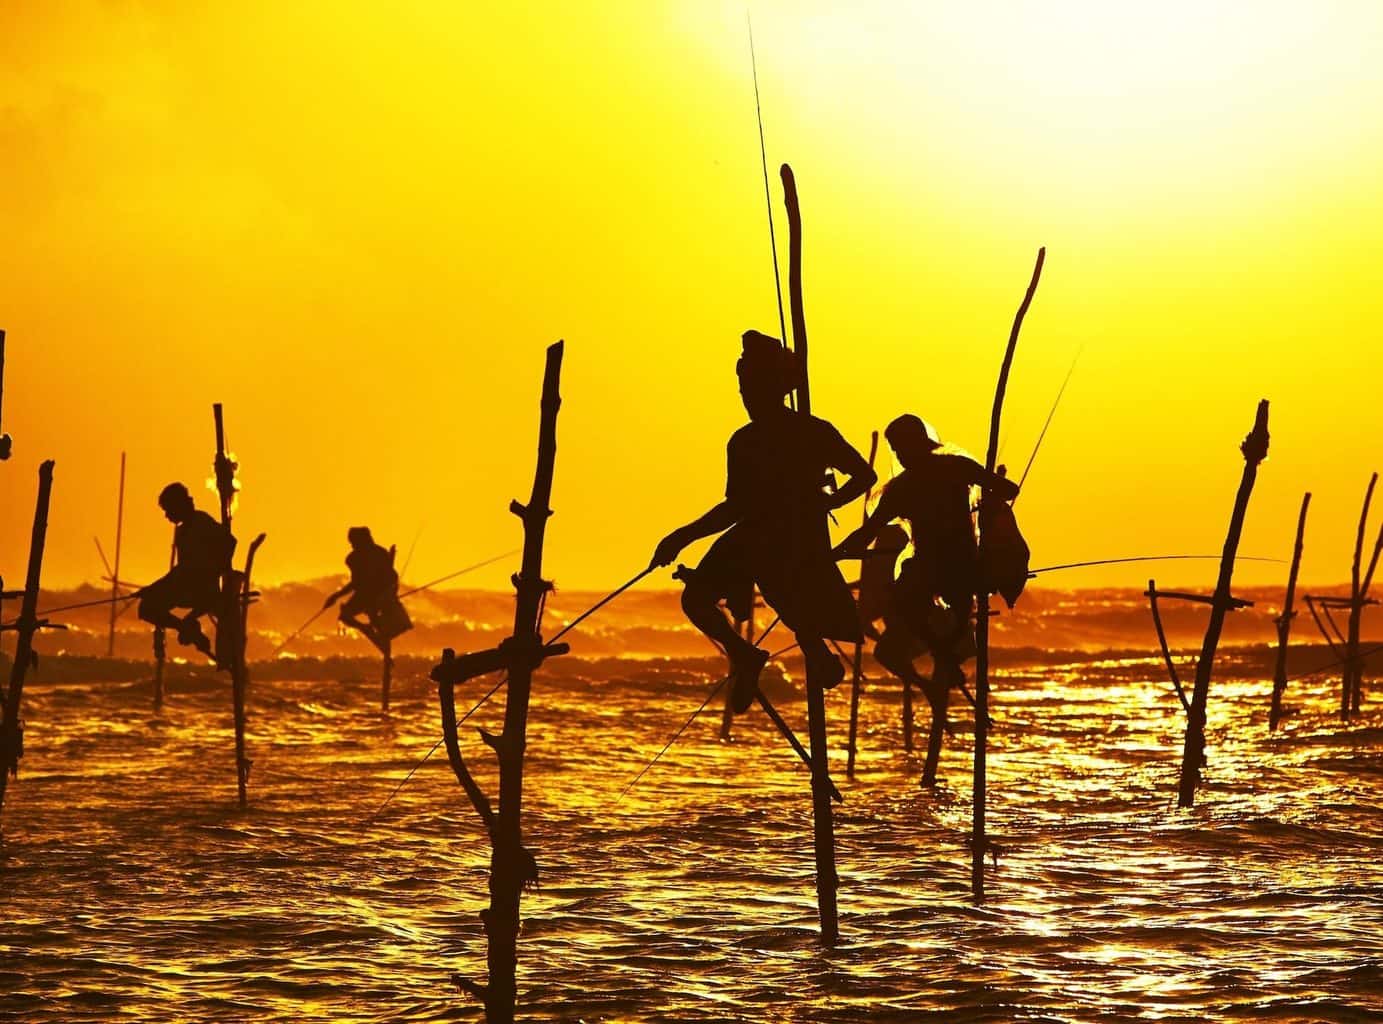 Luxury Sri Lanka Holidays silhoettes in water at sunset